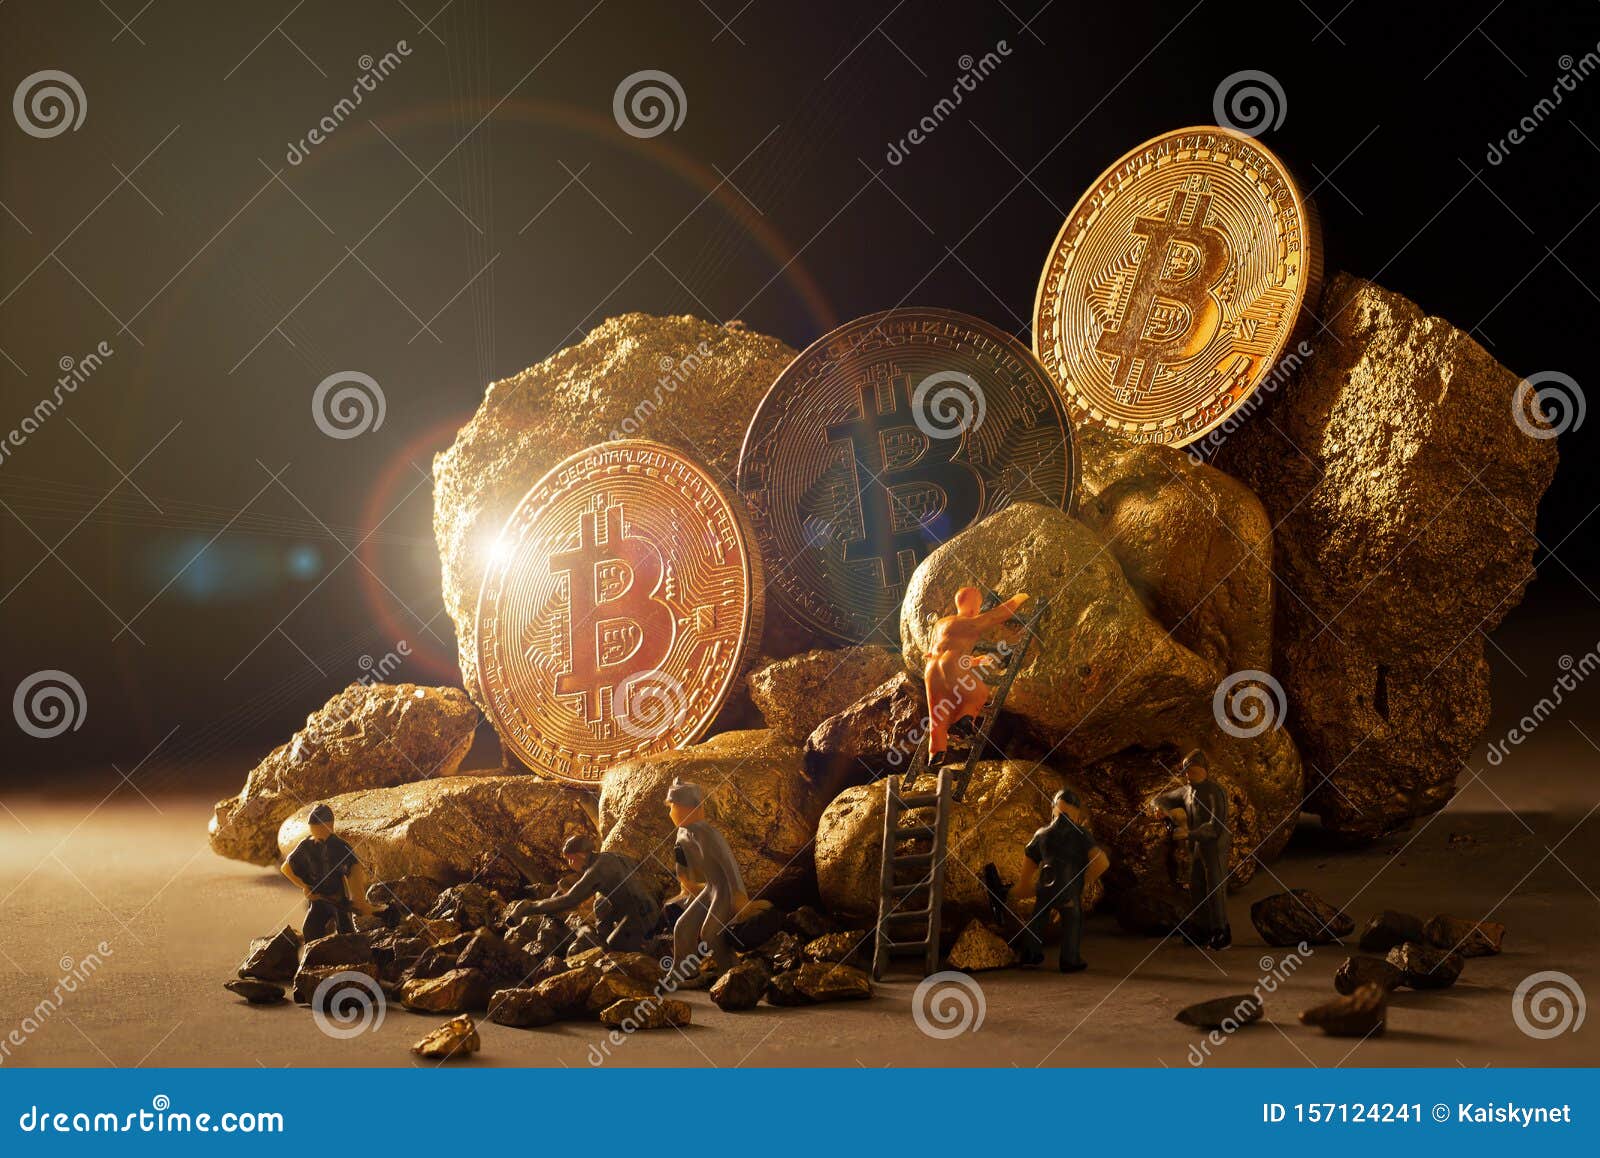 deep bitcoin mining